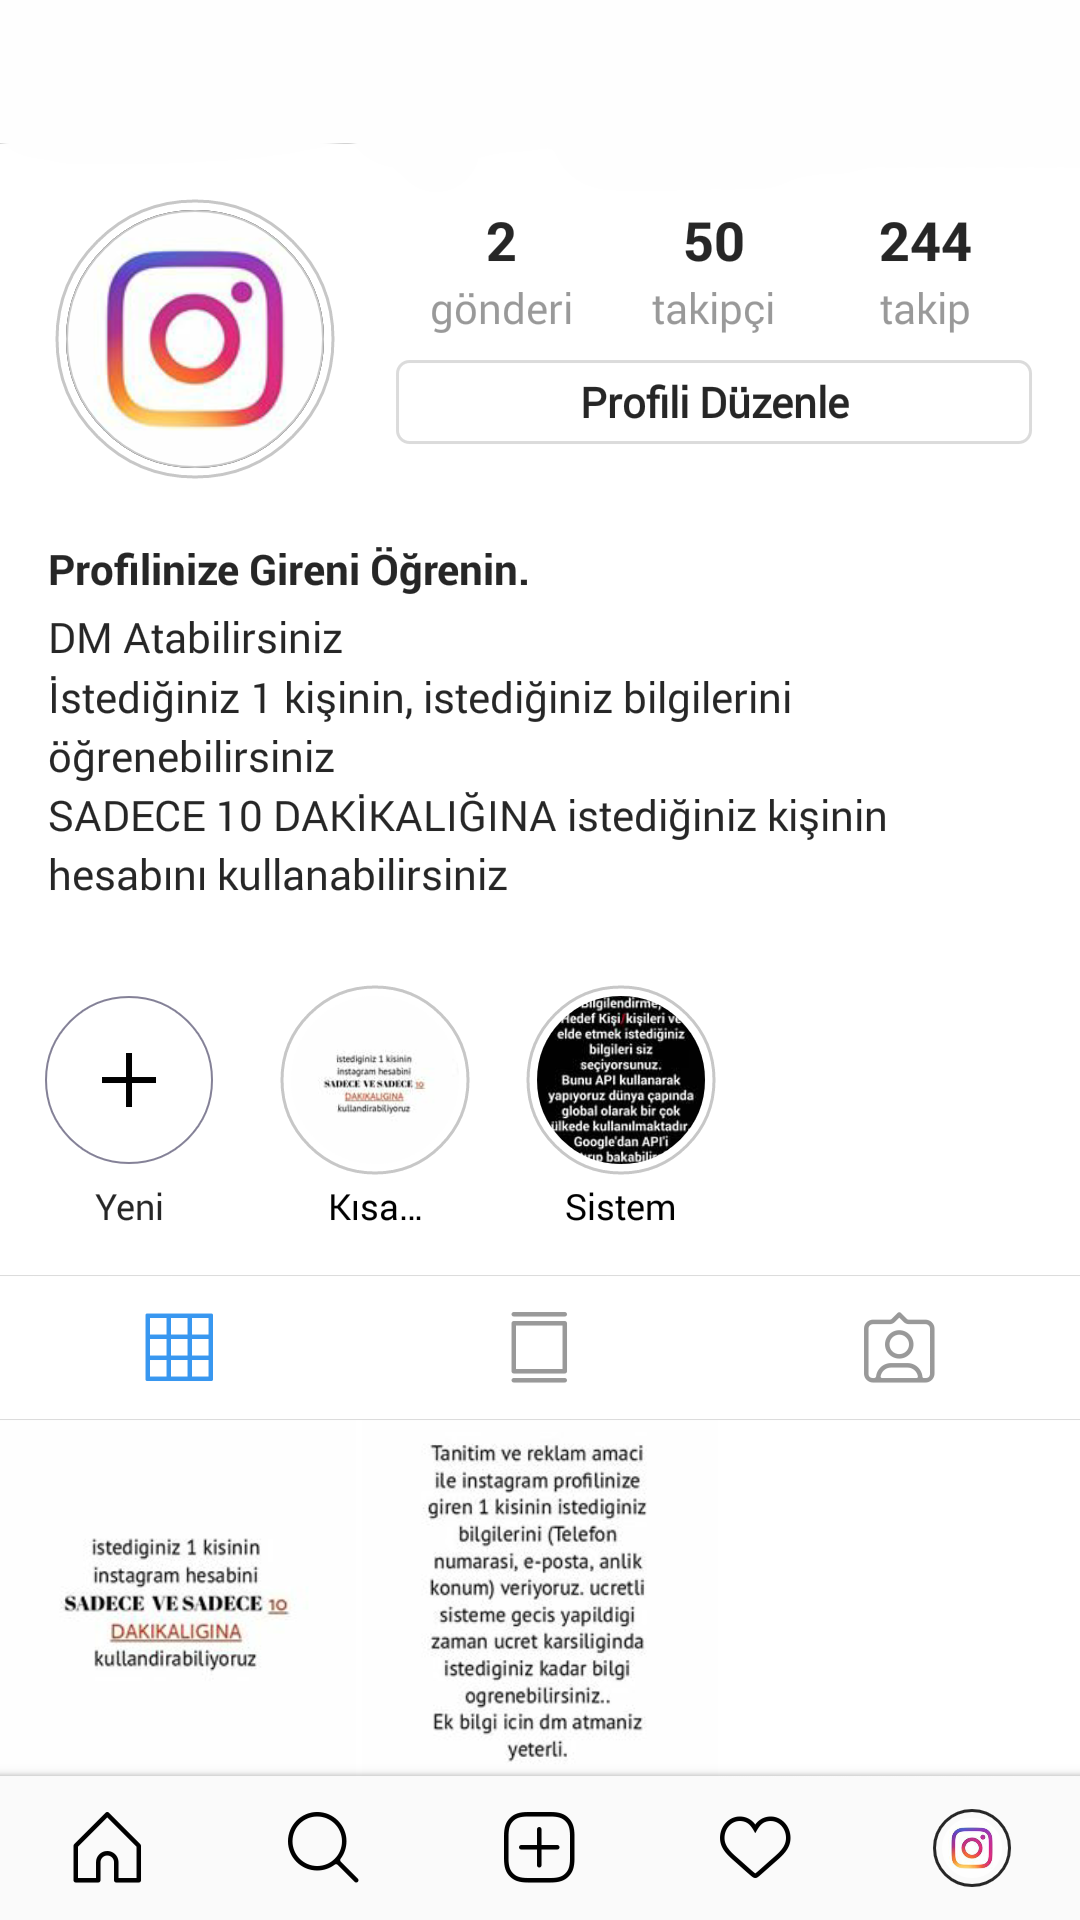  - fake instagram scripti kurulum anlatimi yeni turkhackteam